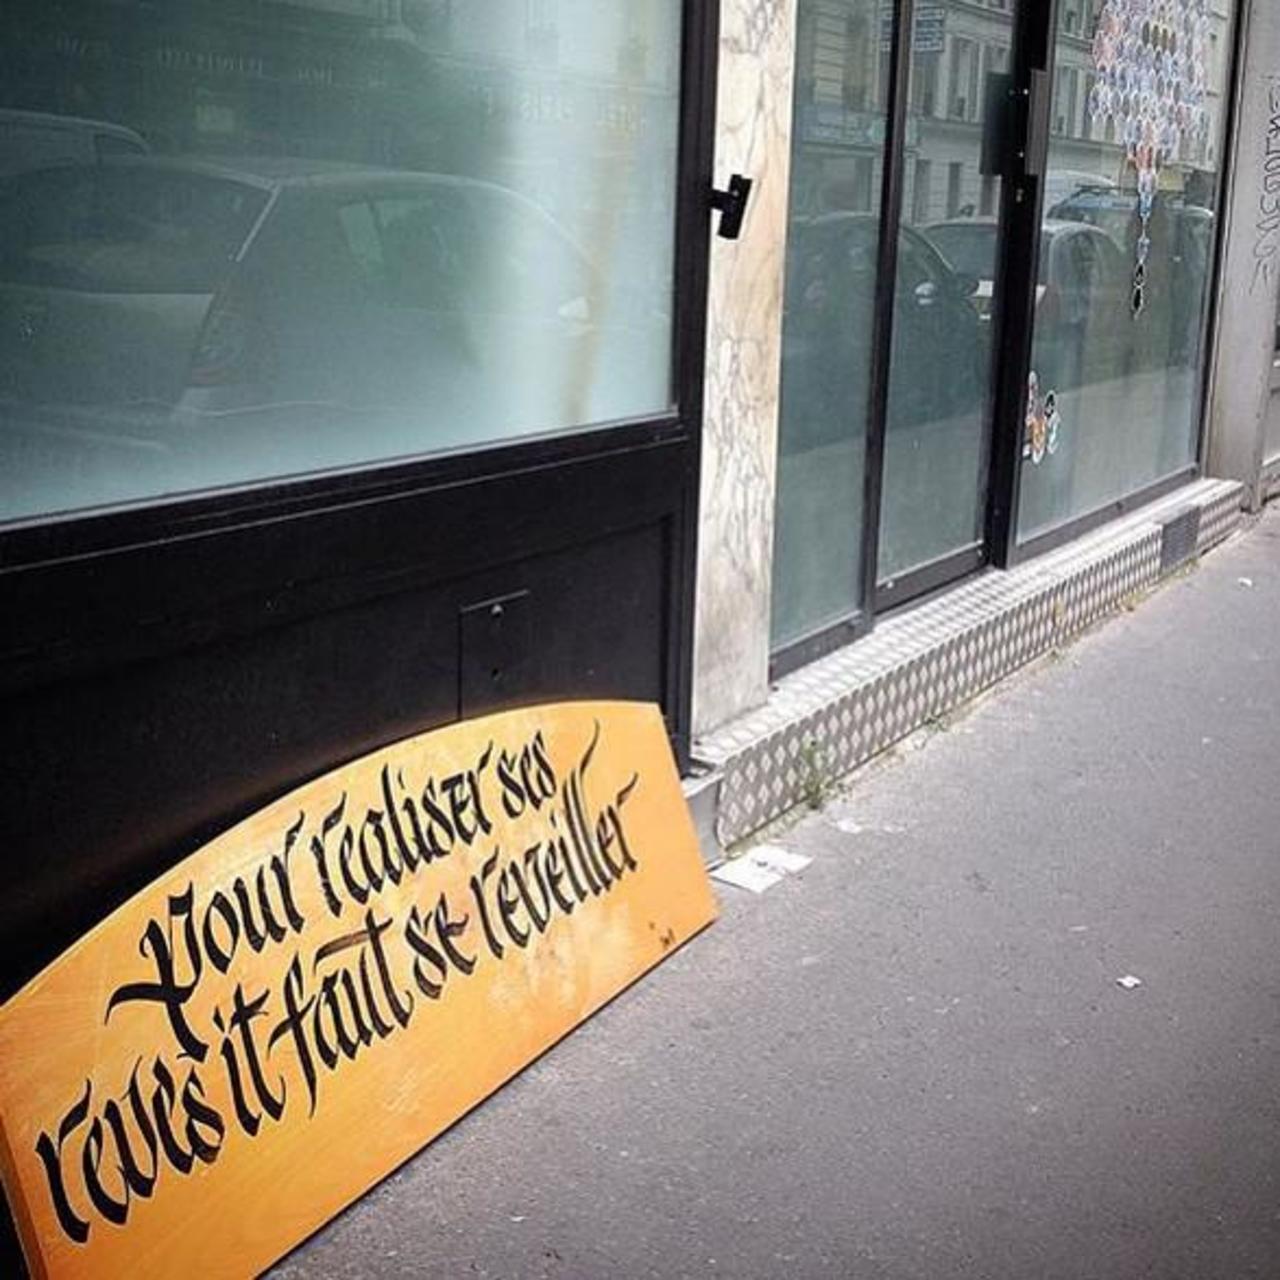 #Paris #graffiti photo by @garbagebeauty http://ift.tt/1Pit7tE #StreetArt http://t.co/lLRxNMZYTY